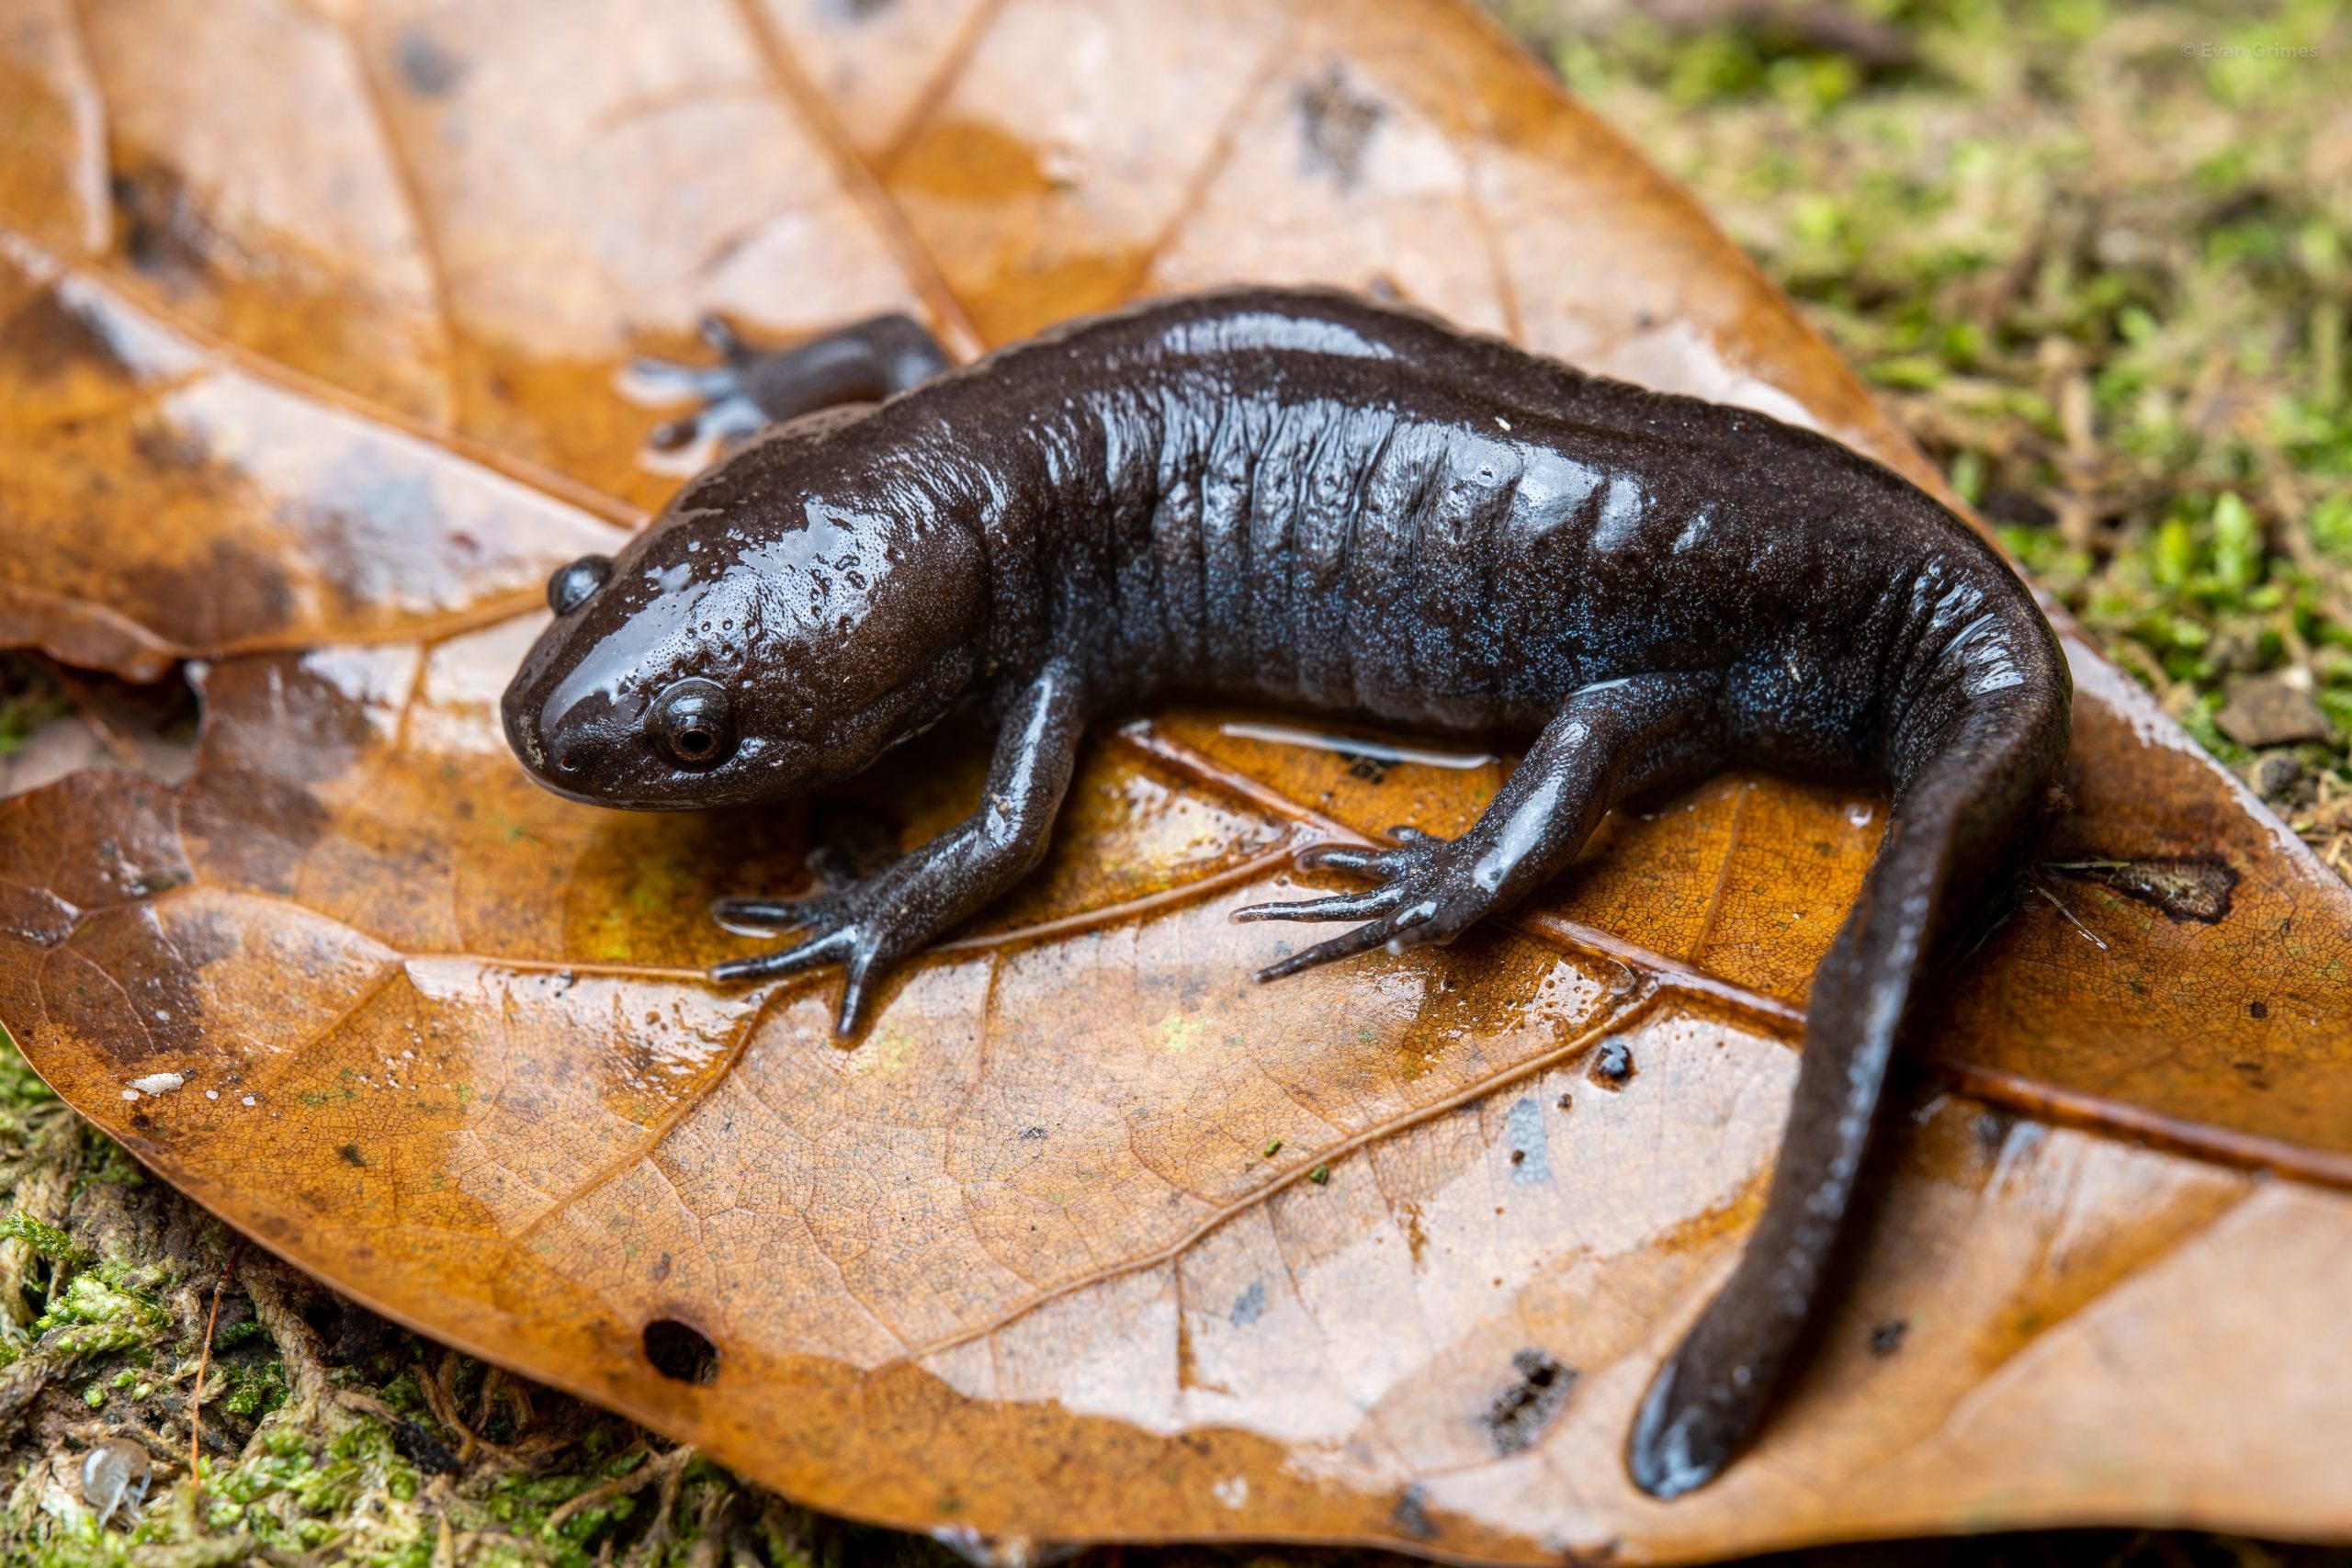 Mole salamander exploration, Reptiles and amphibians of Mississippi, Nature's diversity, Wildlife's hidden treasures, 2560x1710 HD Desktop